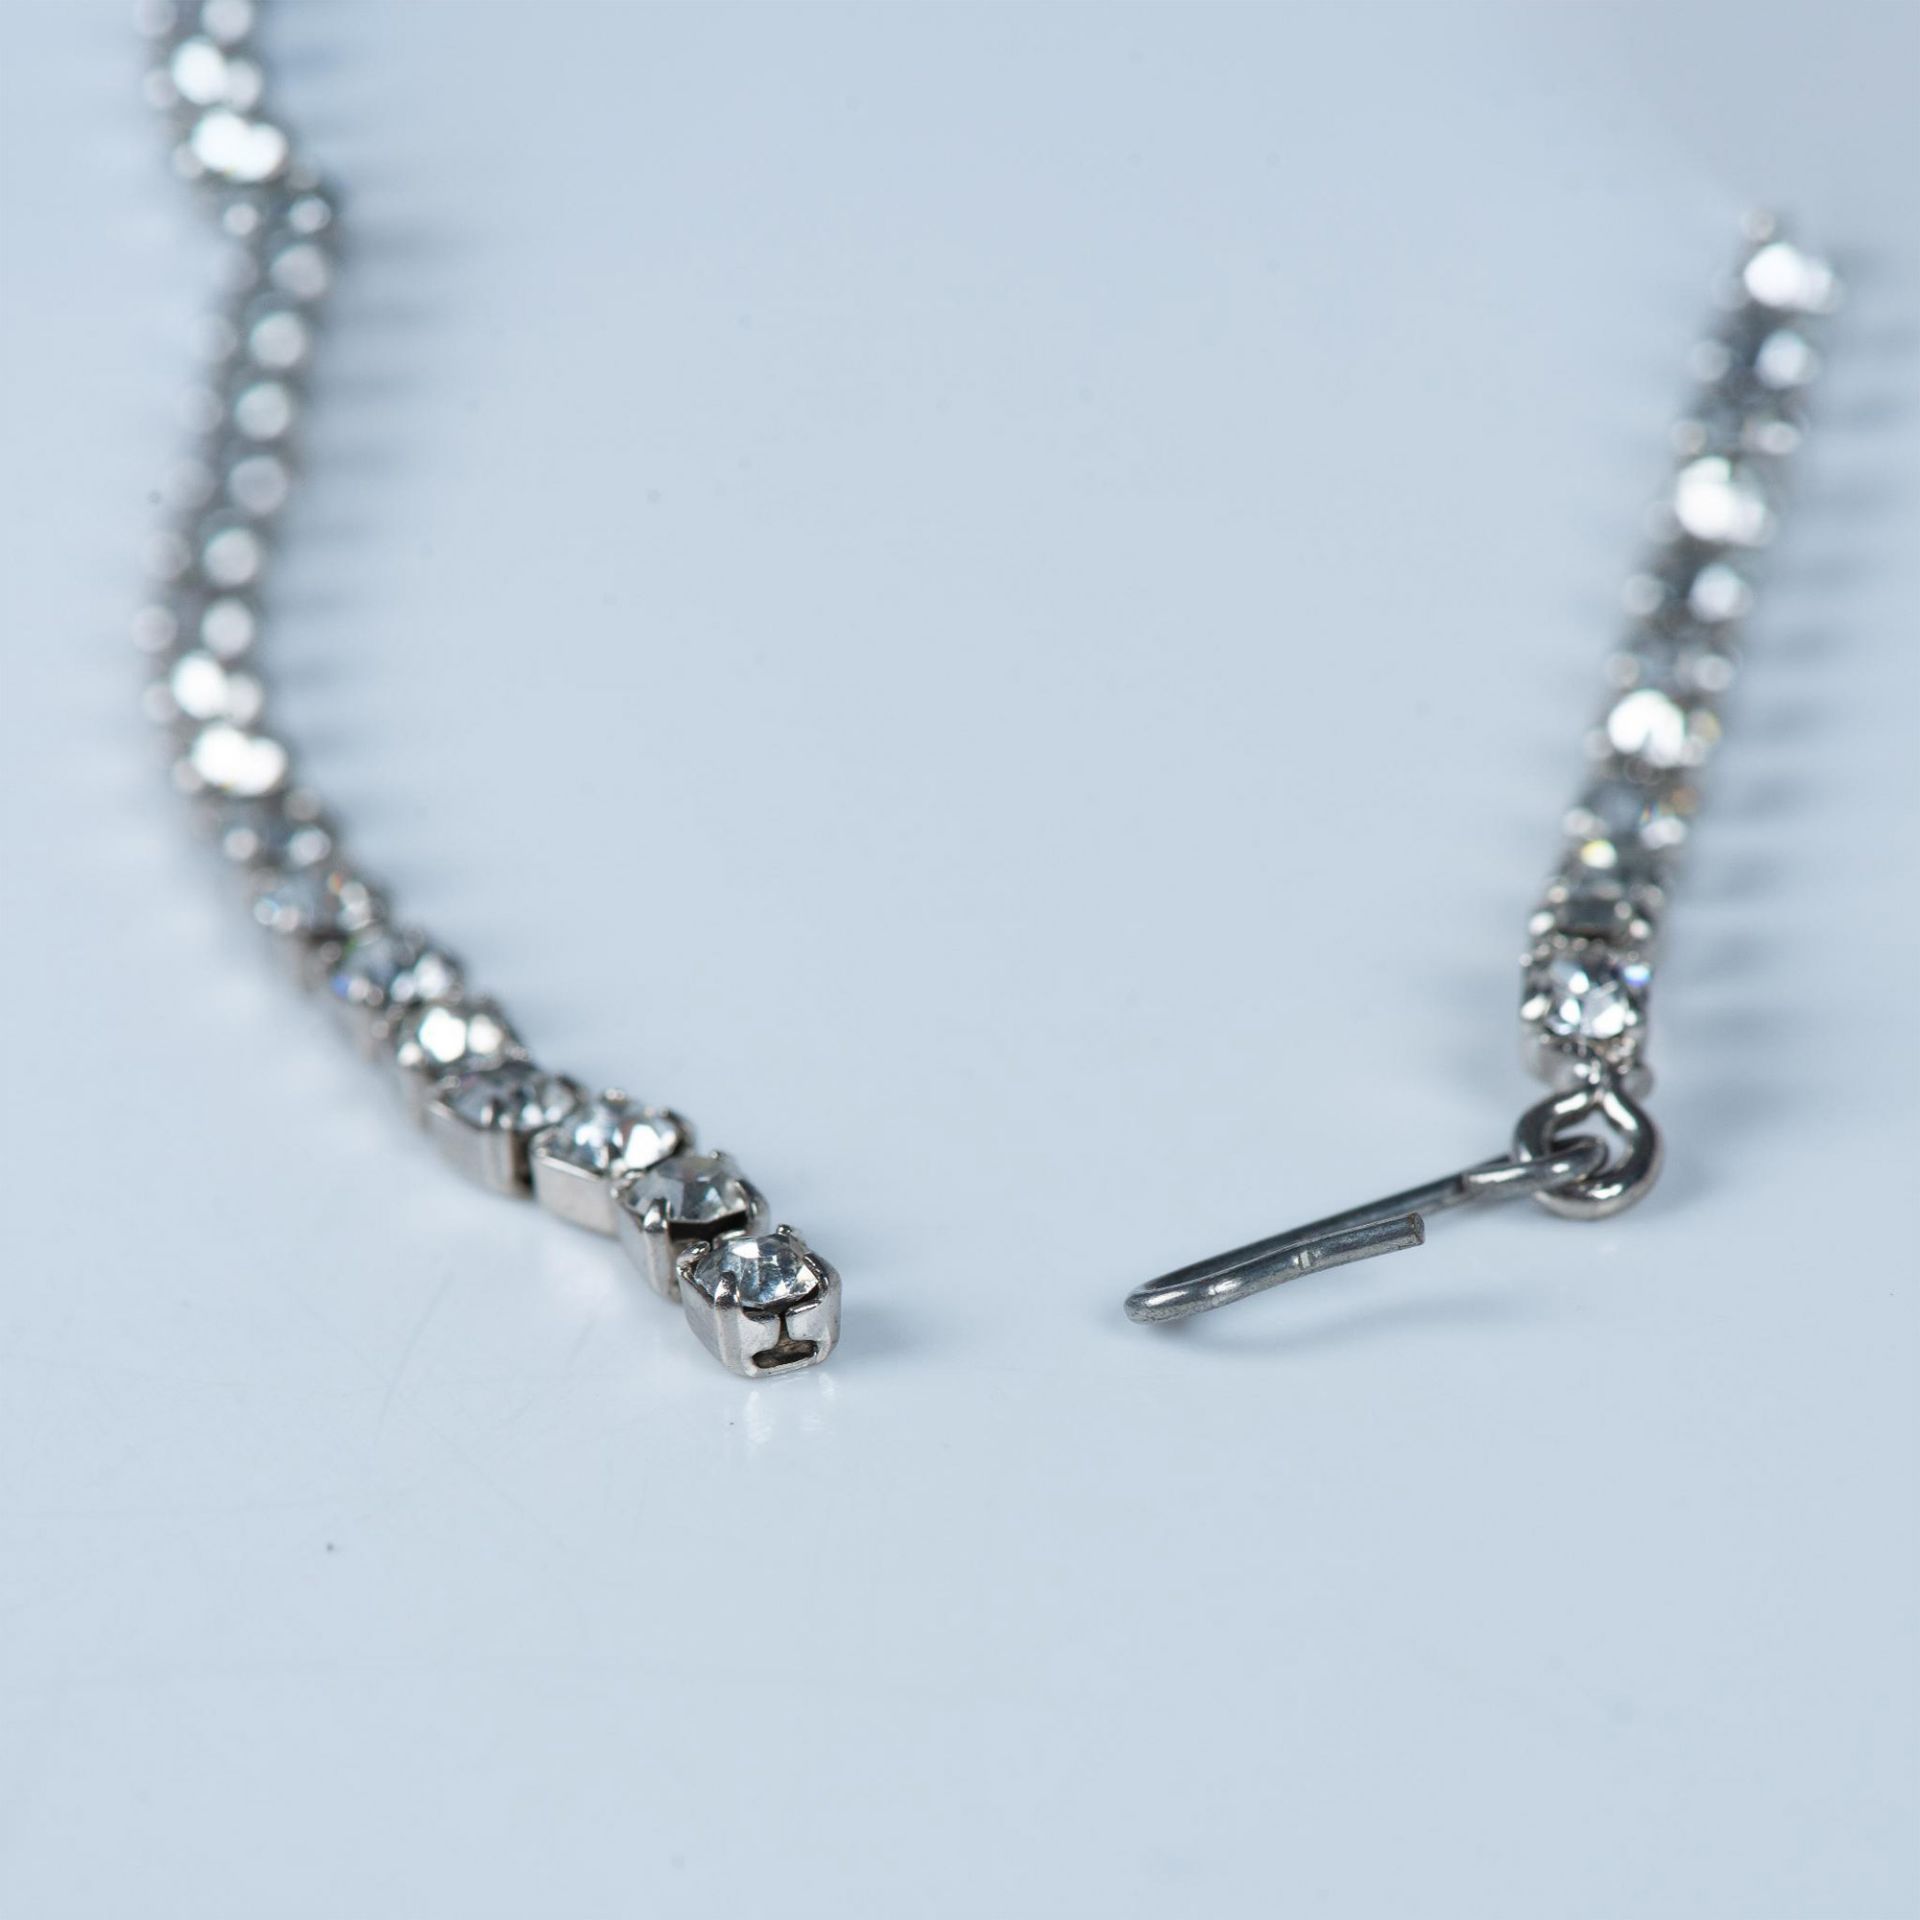 Stunning Silver Metal & Rhinestone Necklace - Image 5 of 7